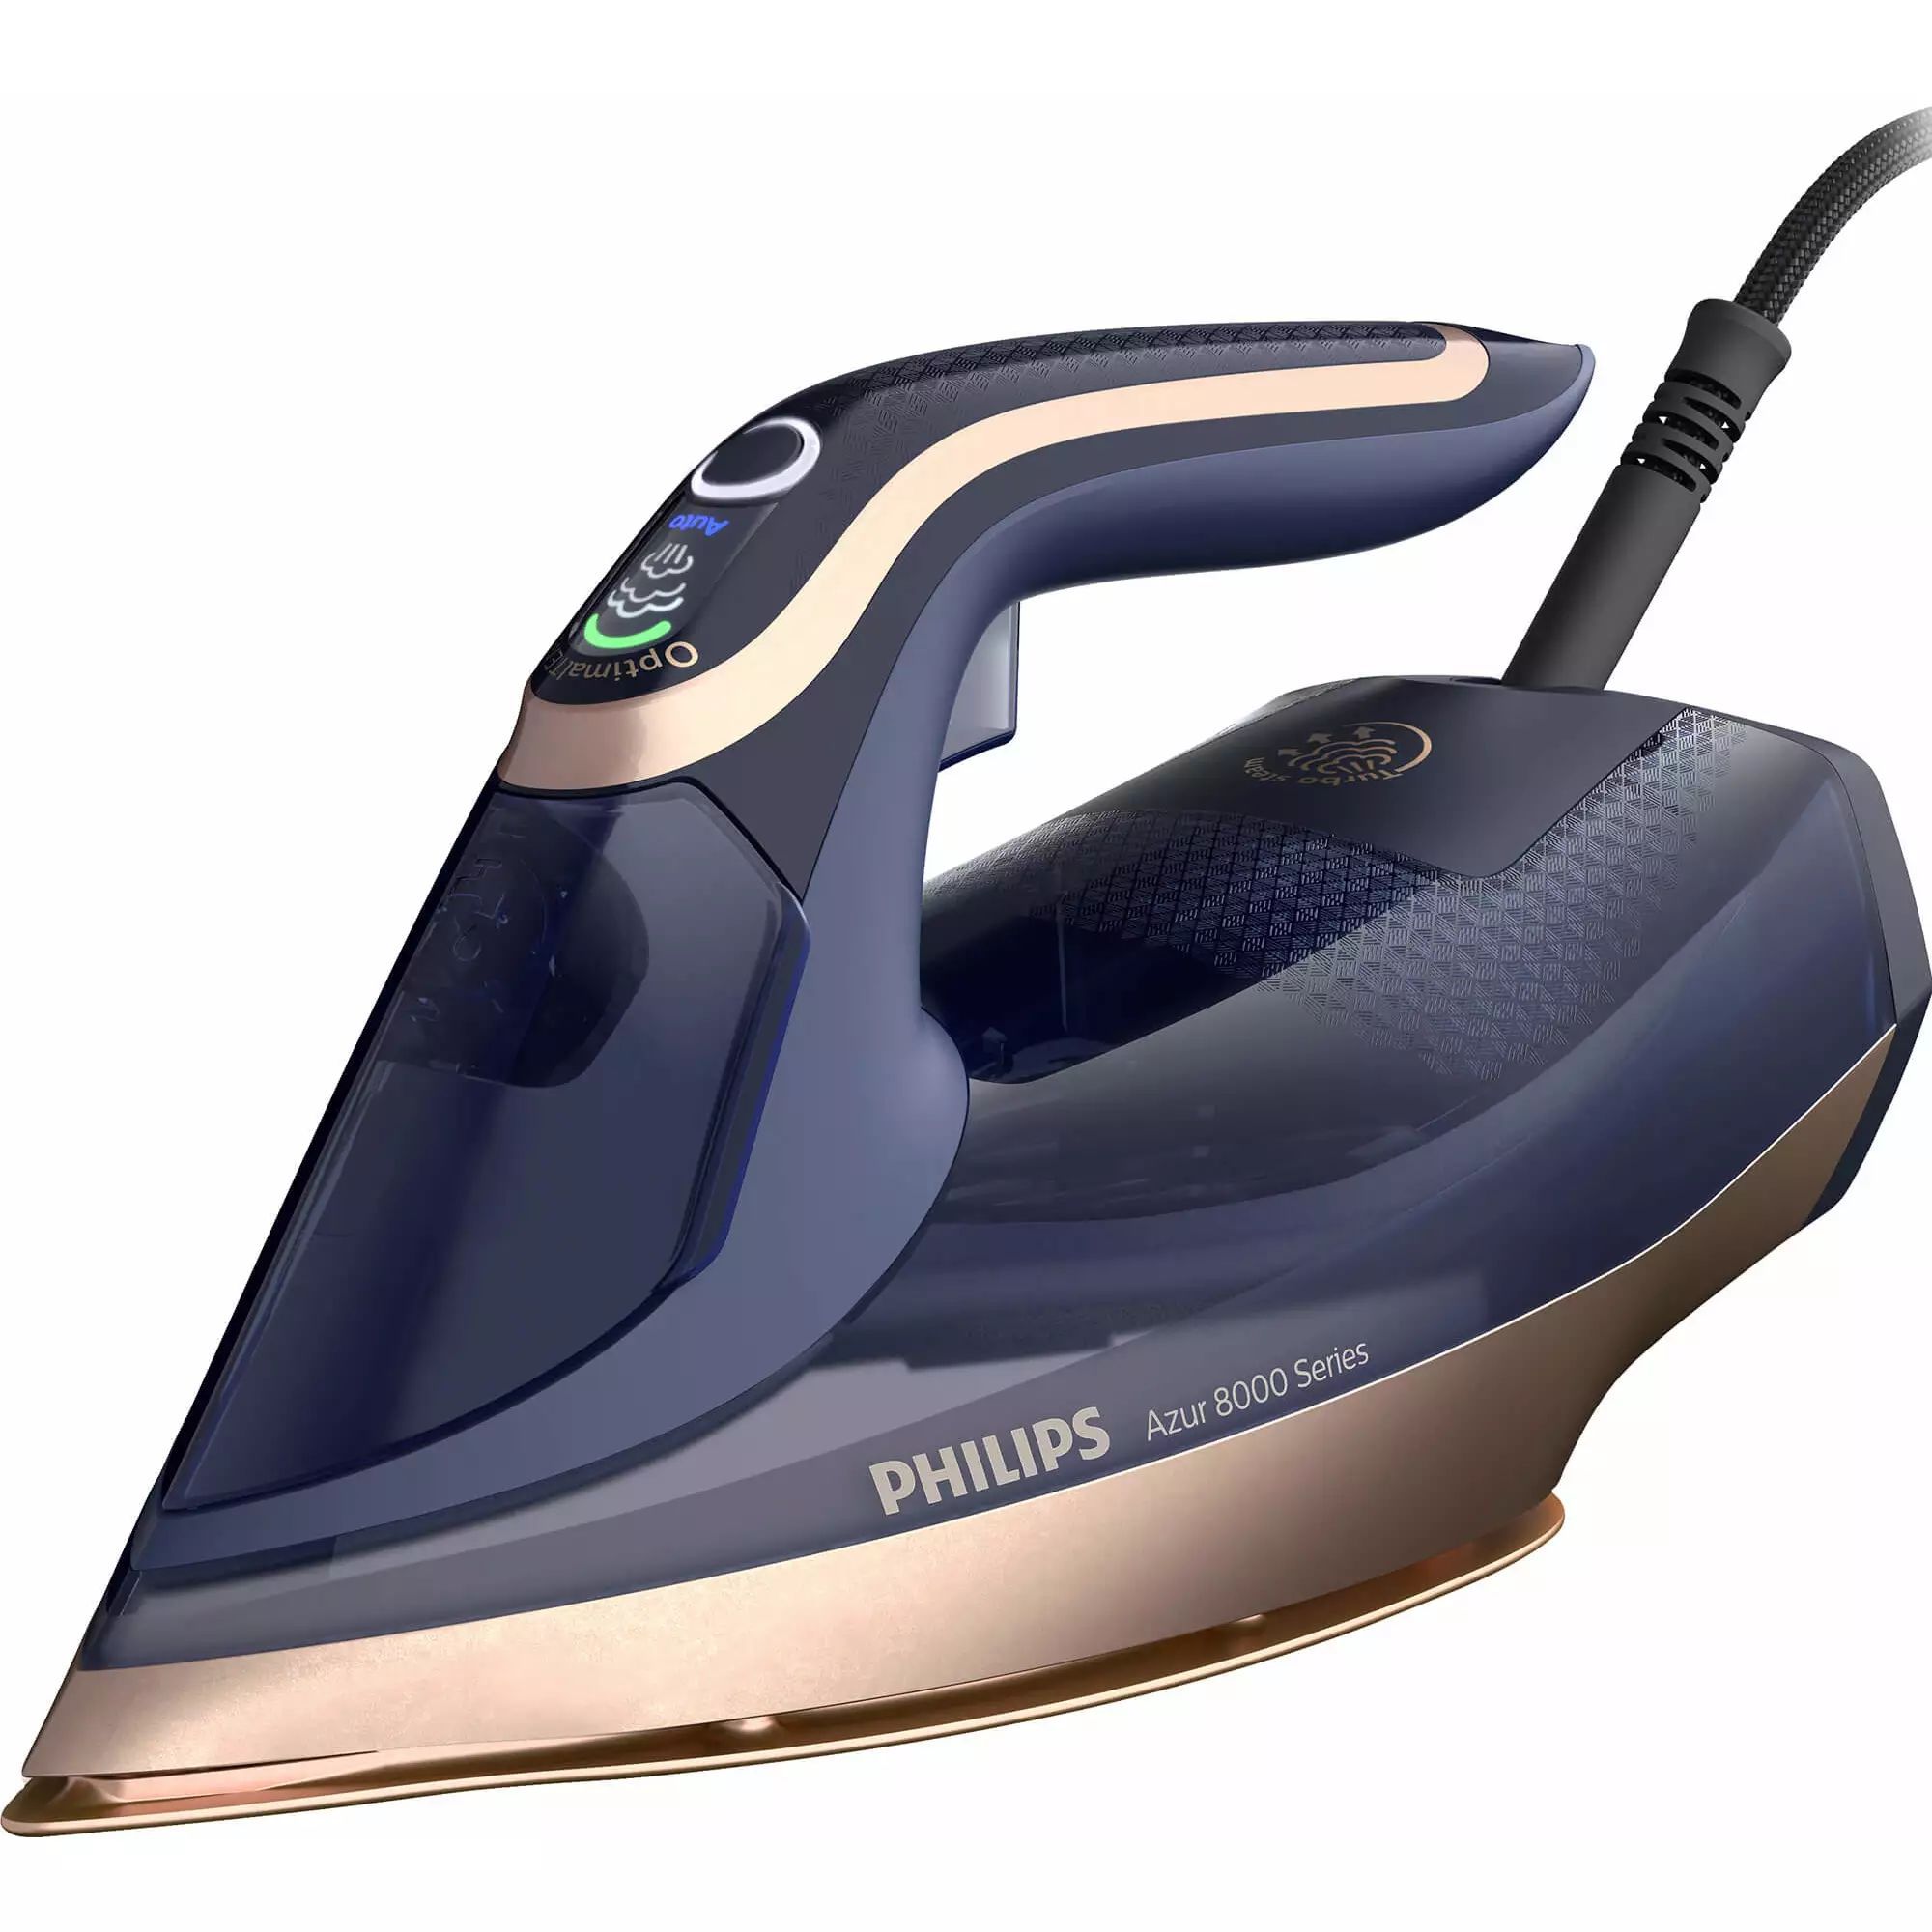 Philips steam generator 8000 фото 50